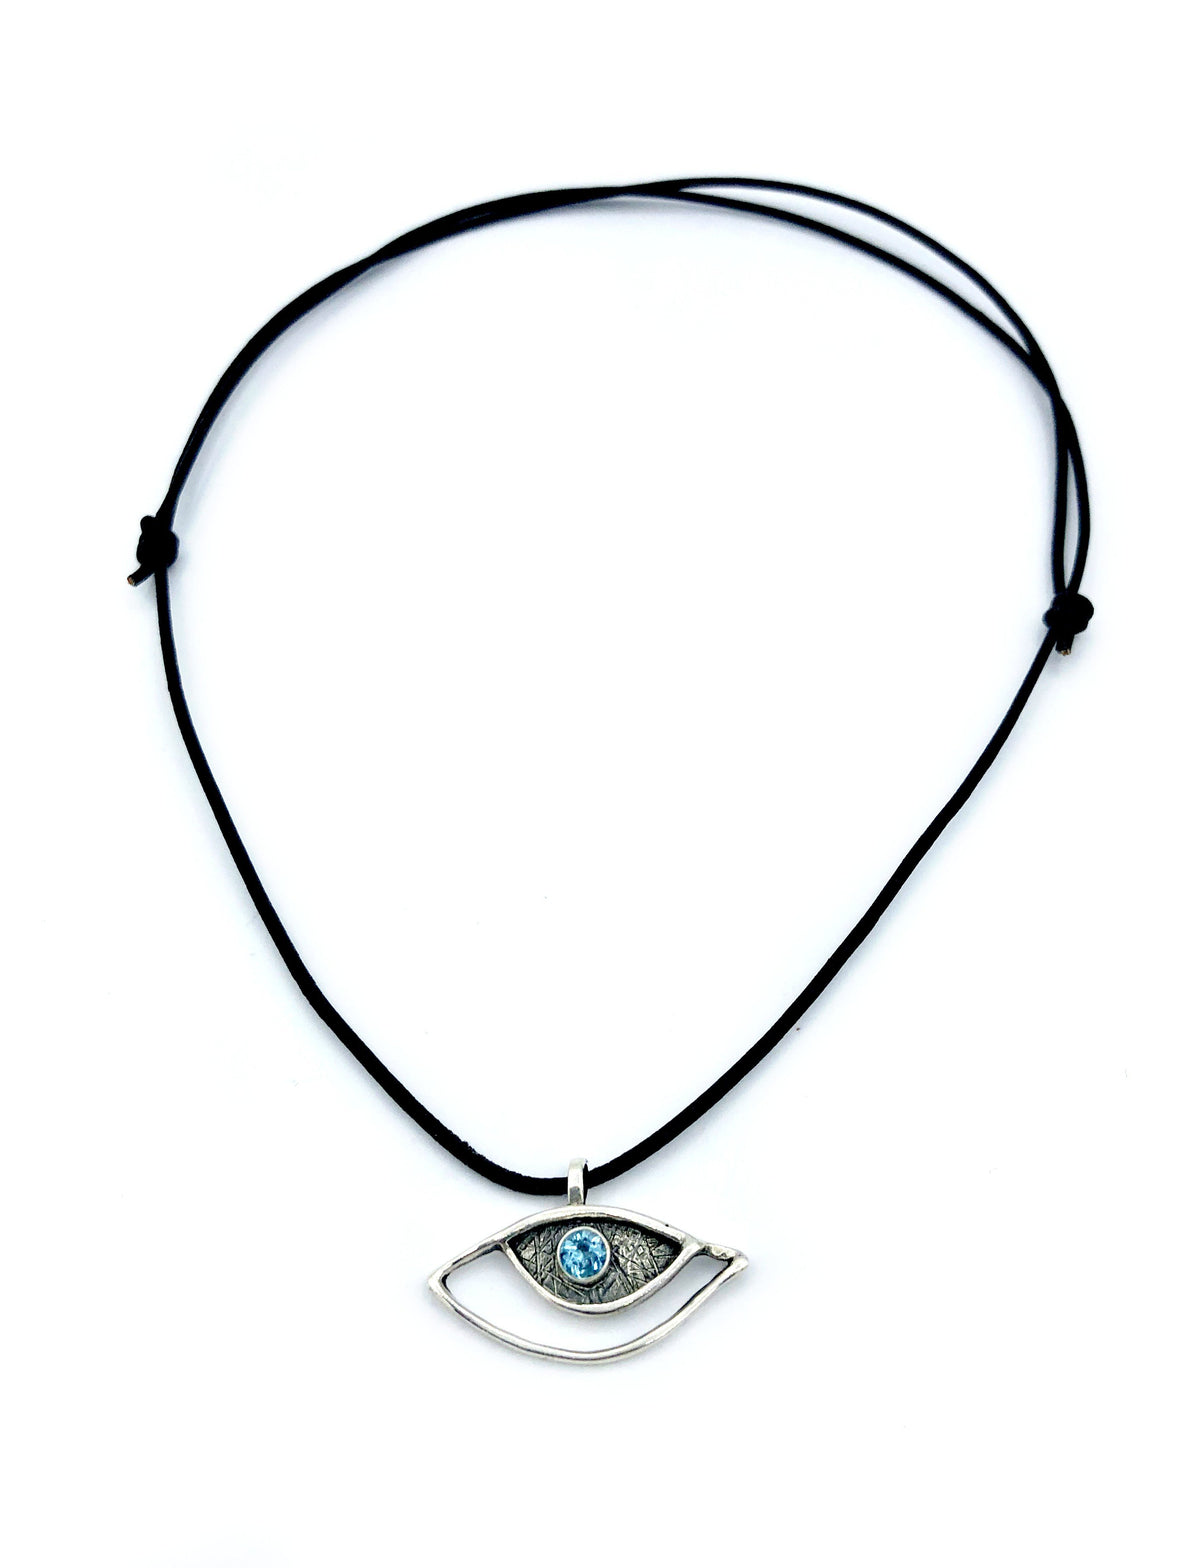 eye pendant, blue topaz pendant, silver eye pendant with leather cord evil eye jewelry 